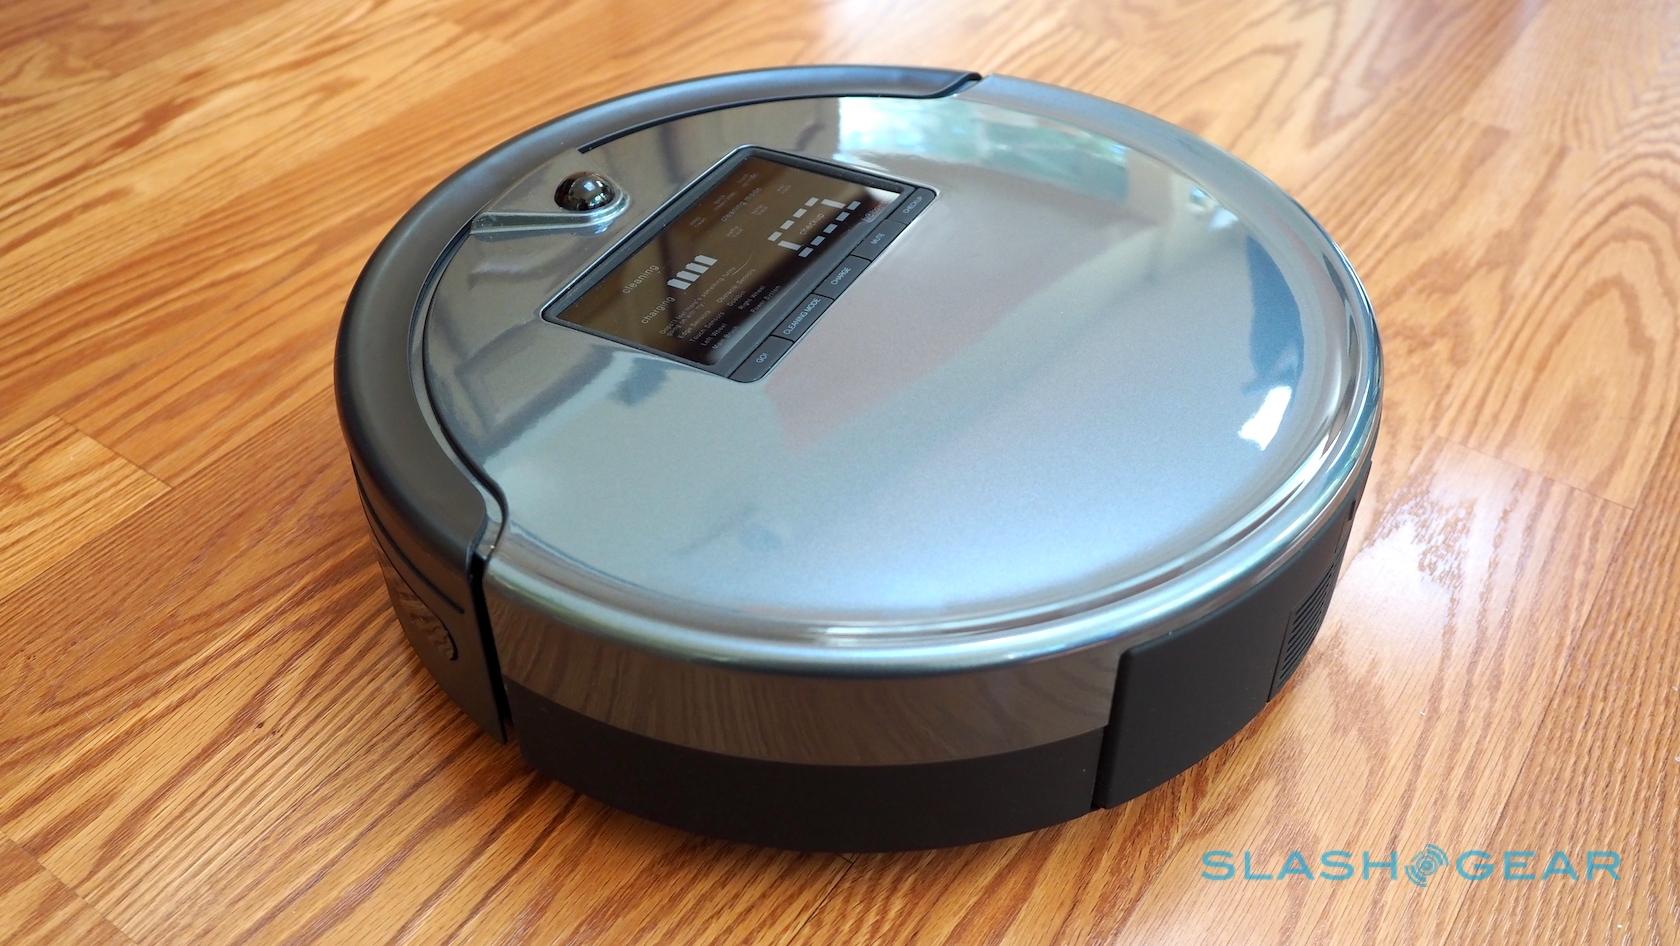 Bobsweep Pethair Plus Robot Vacuum Review Slashgear